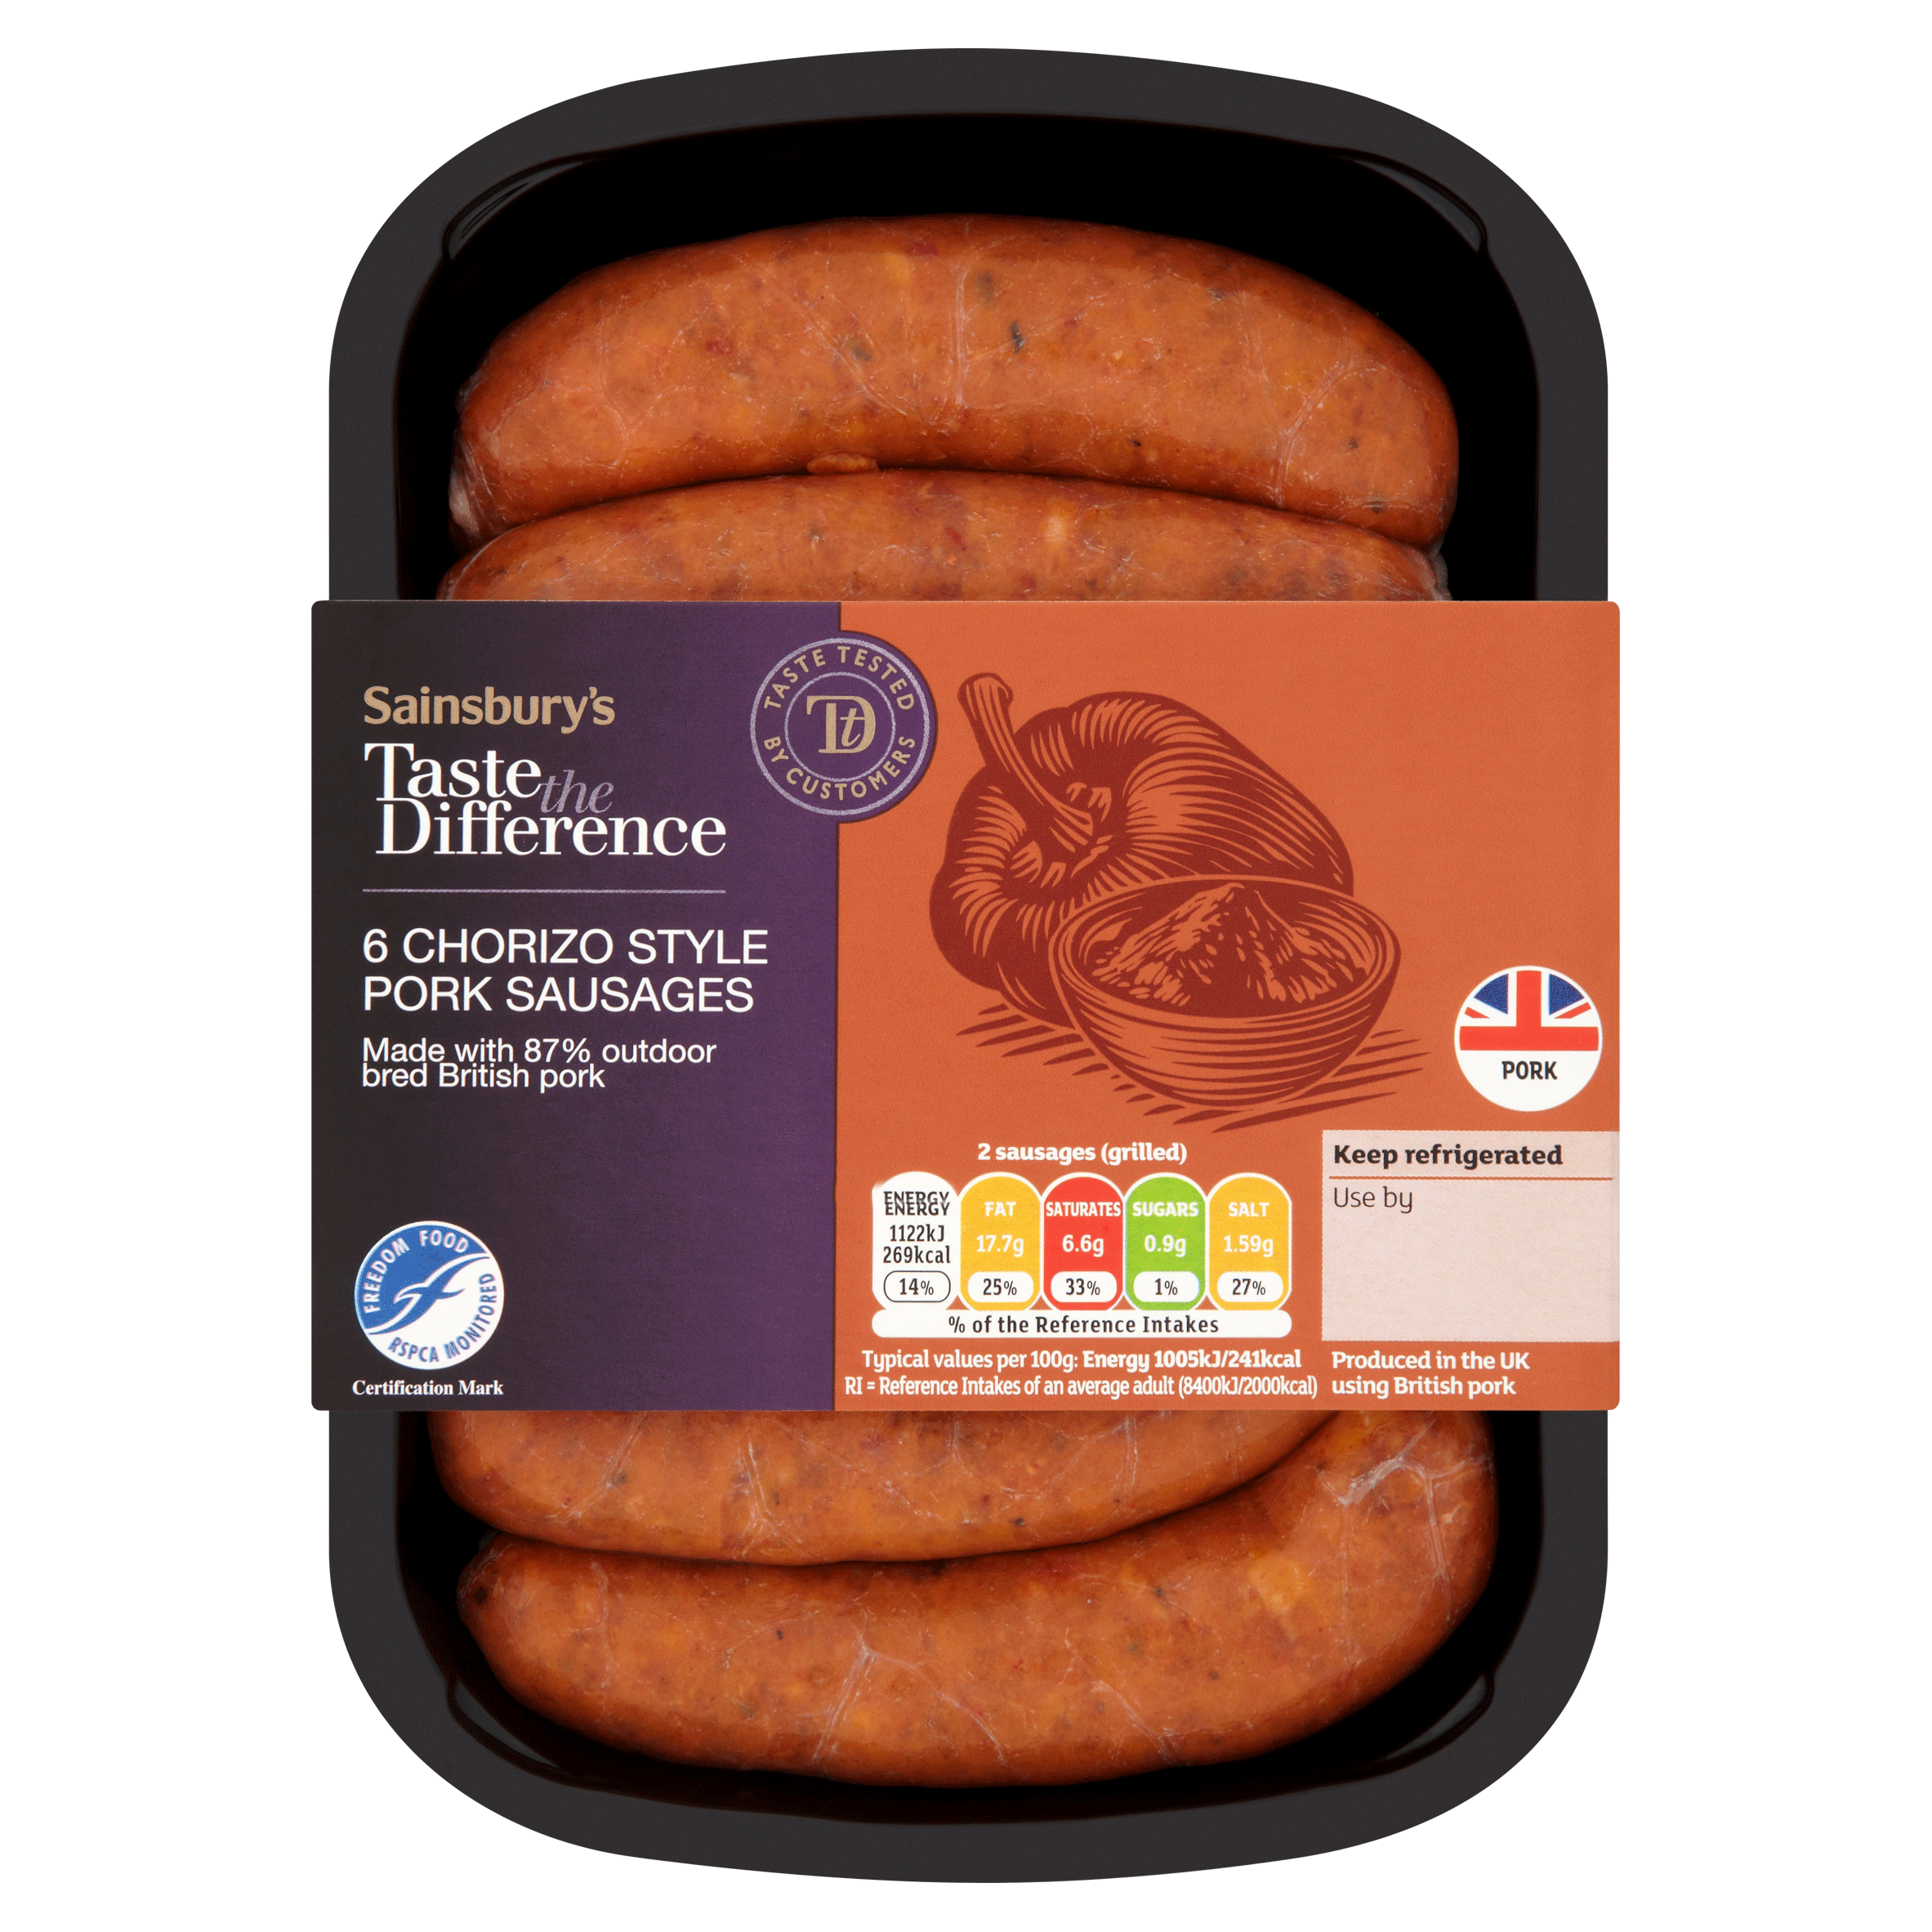 Sainsbury's Taste The Difference Chorizo-Style Pork Sausages